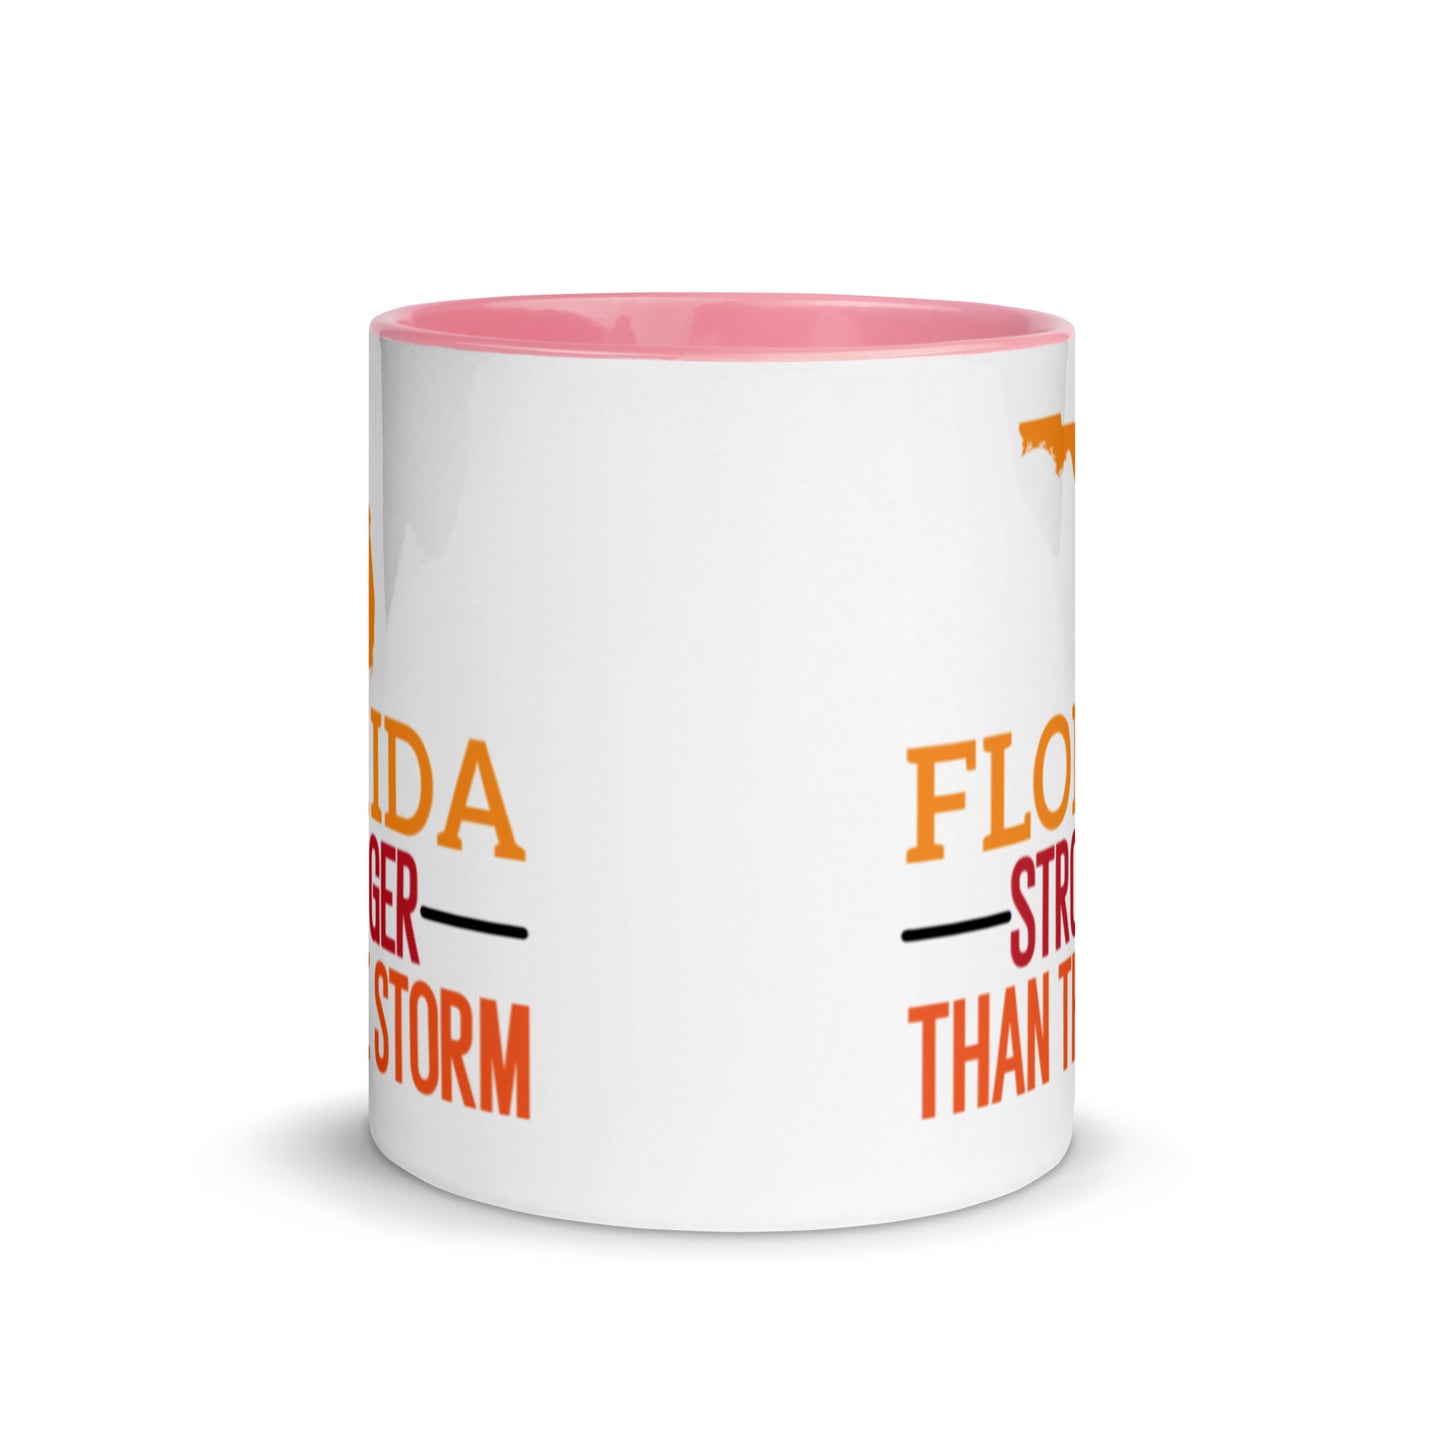 Florida Stronger Than The Storm Ceramic Mug